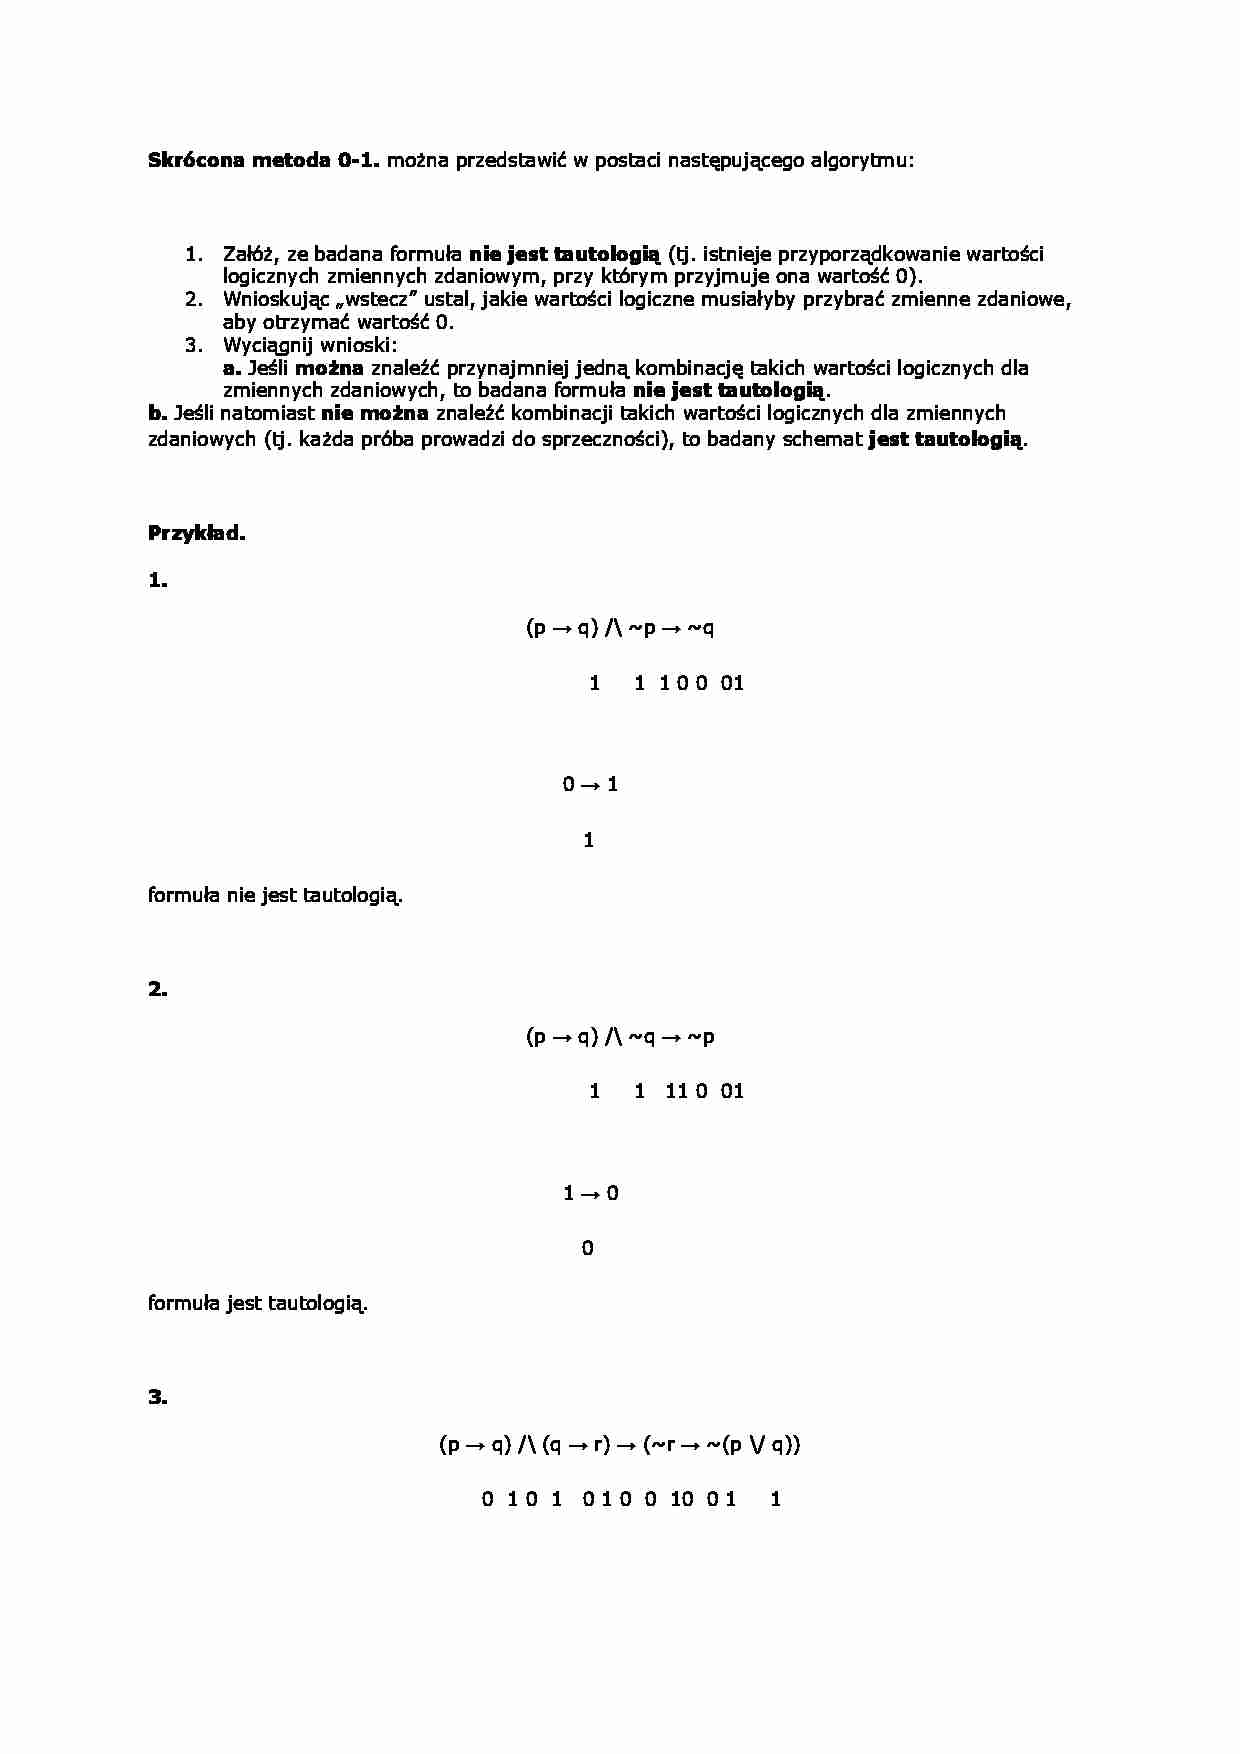 Skrócona metoda 0-1 - strona 1